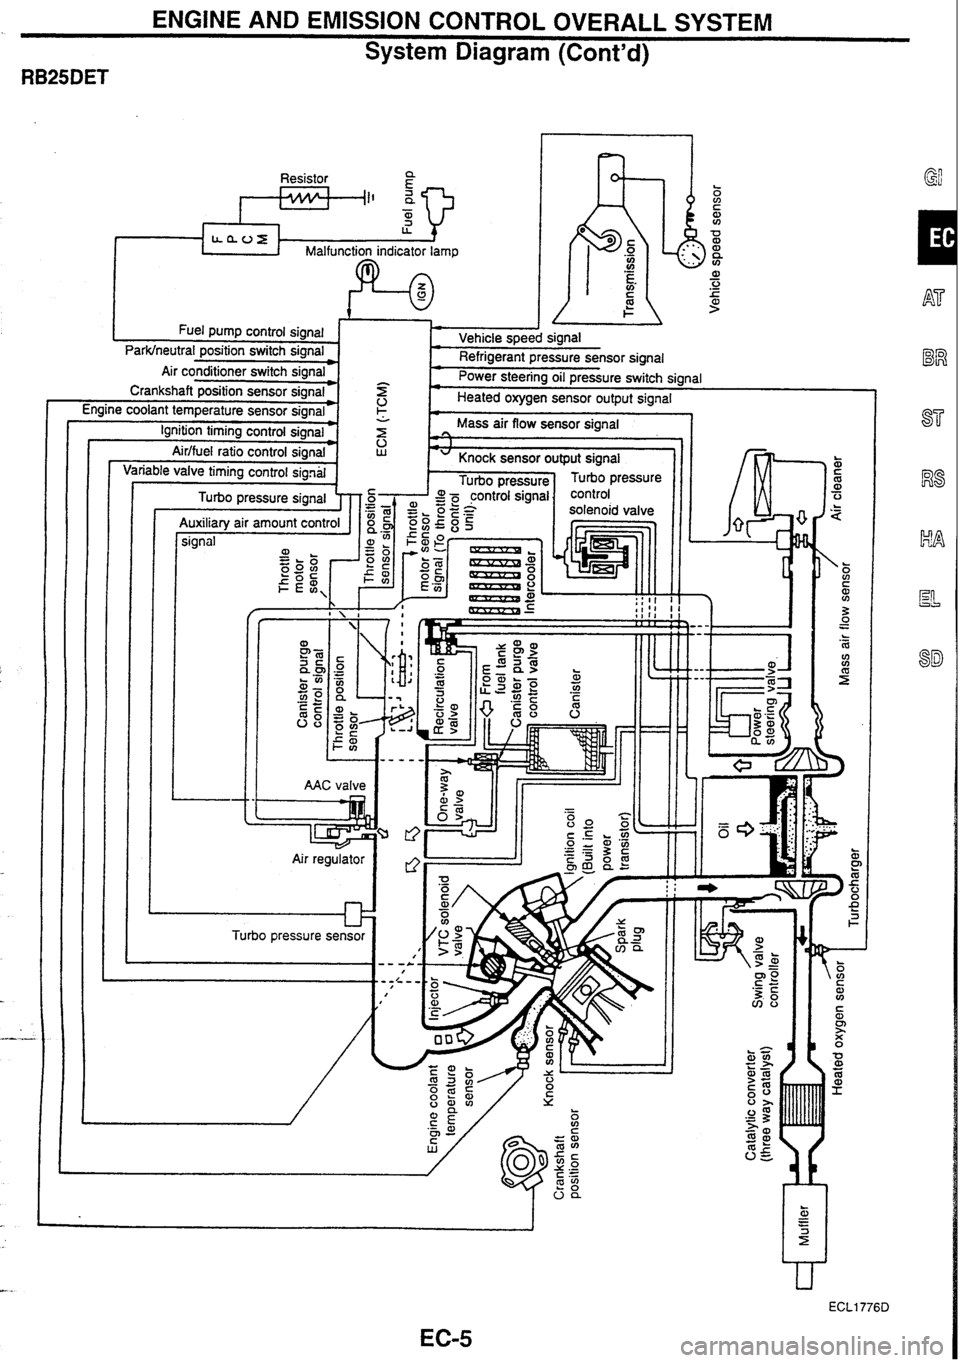 NISSAN GT-R 1998  Service Manual 
ENGINE AND EMISSION  CONTROL OVERALL  SYSTEM 
System Diagram (Contd) 
Resistor a 
I I~I I 1 
w 
C LLOE Malfunction indicator  lamo 
I Fuel DU~D control sional I Vehicle  soeed  sianal I 
Parklneutra